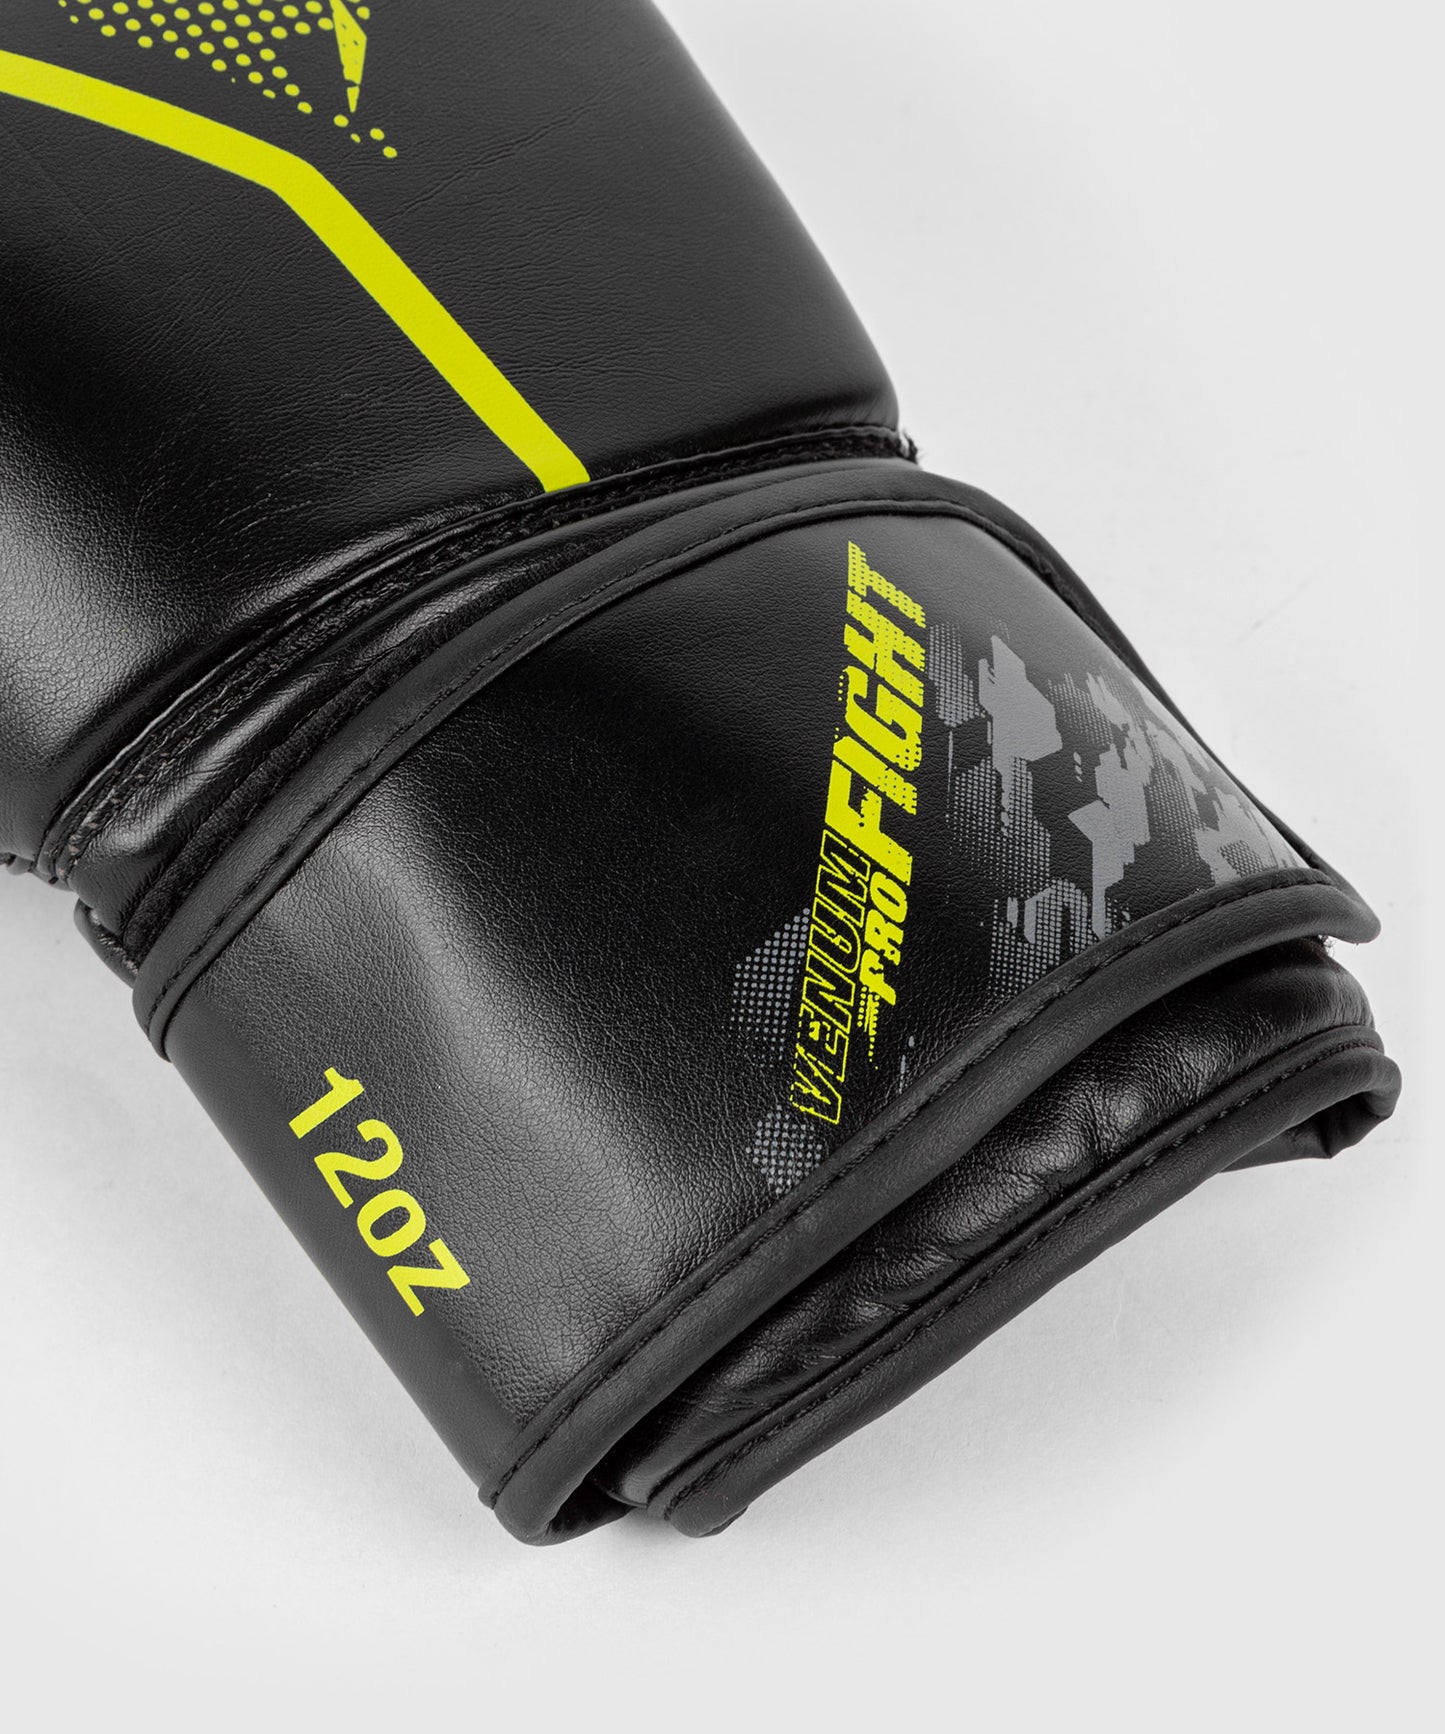 Venum Contender 1.2 Boxing Gloves - Black/Yellow